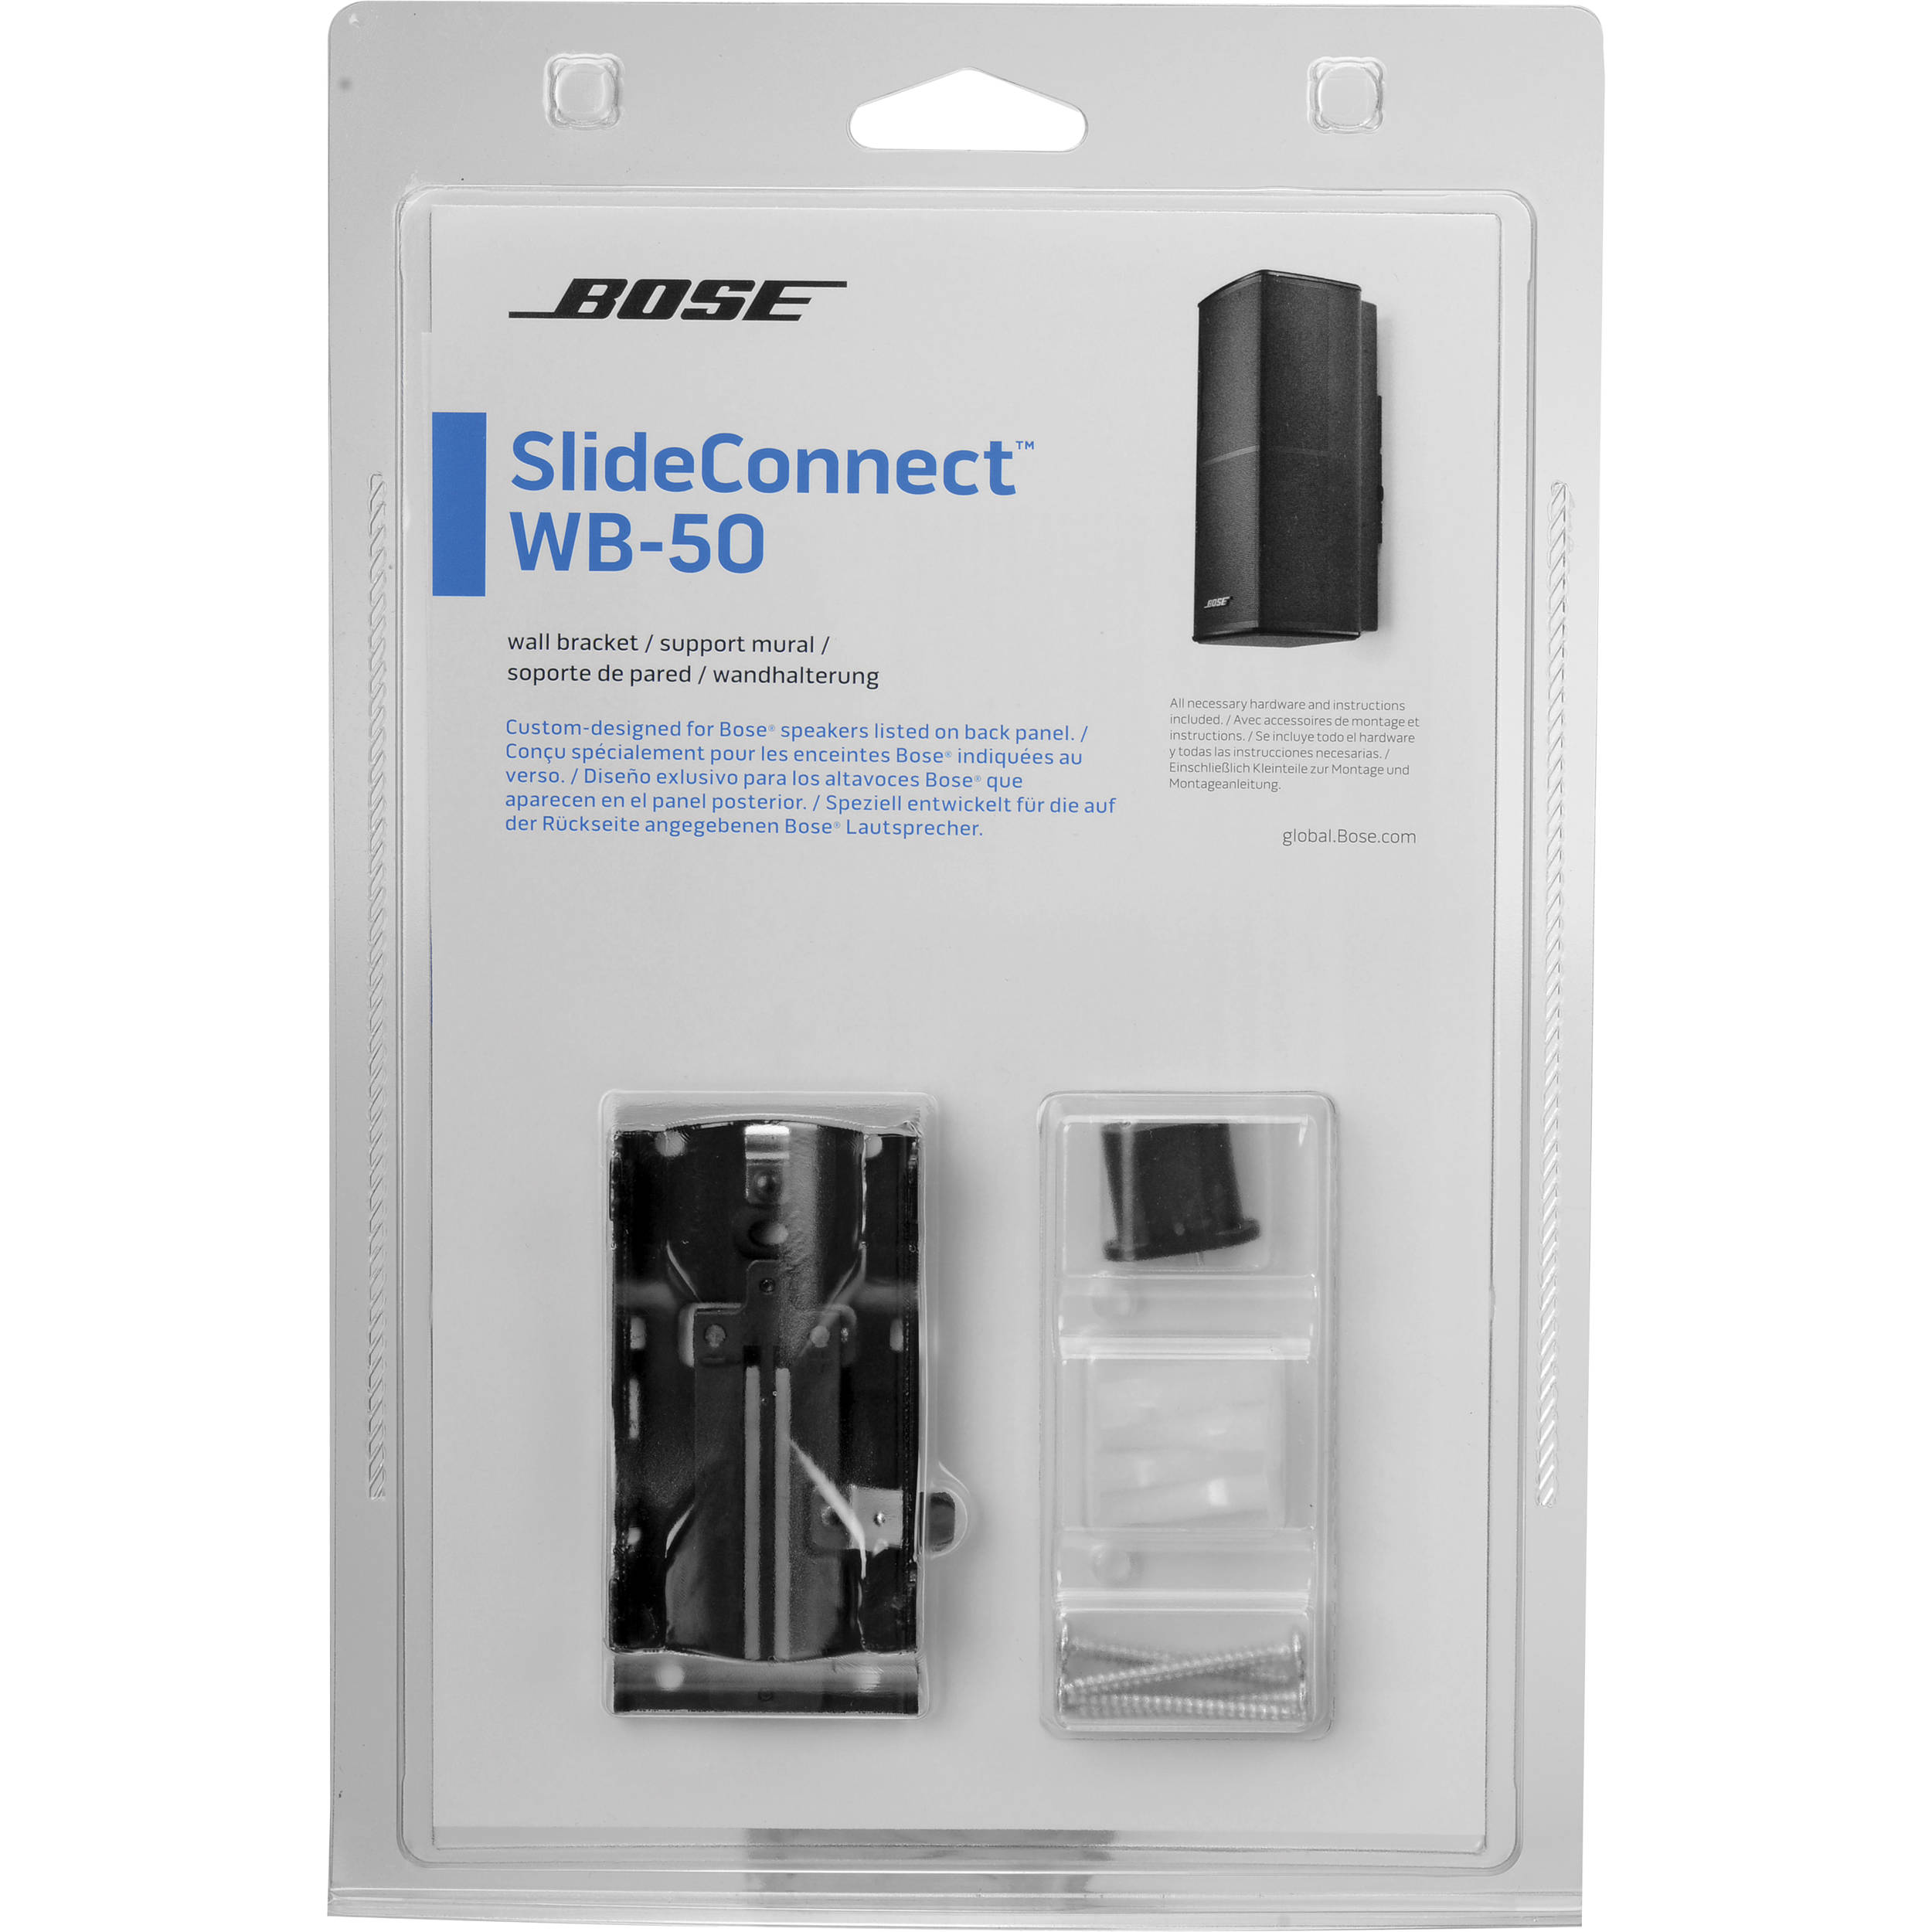 Bose Slideconnect Wb 50 Wall Bracket Black 716402 0010 B H